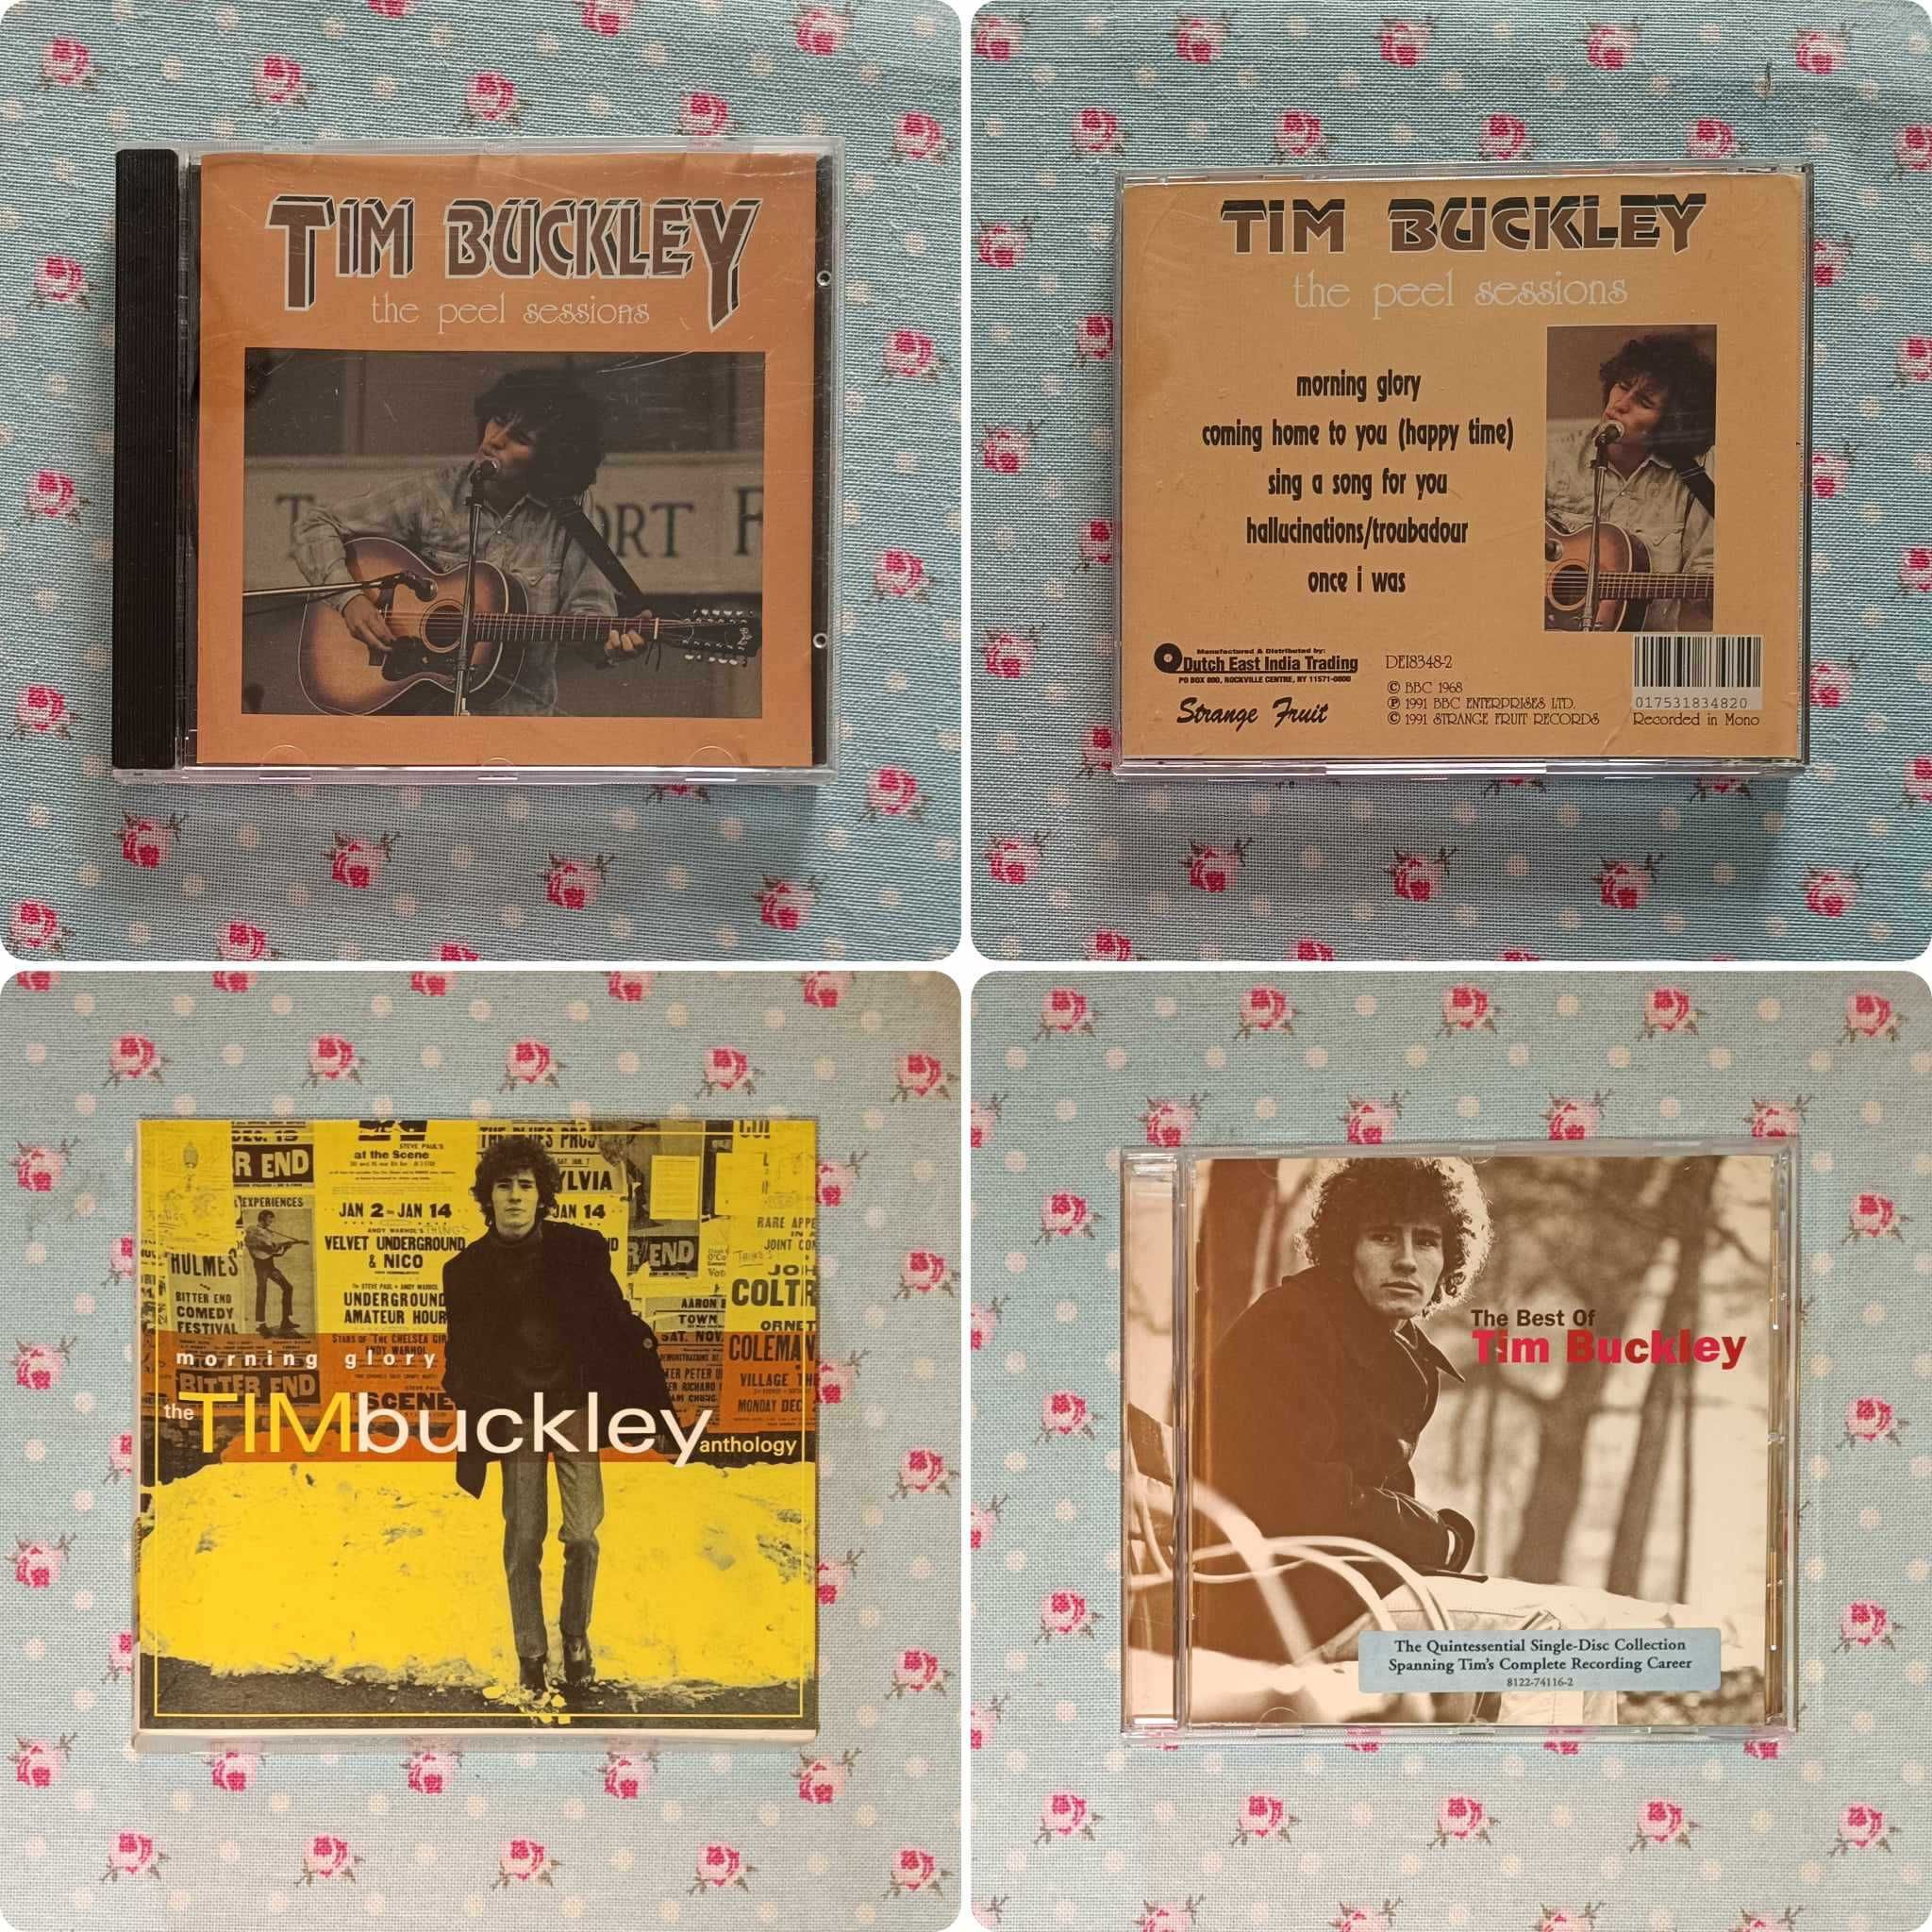 3 CDs Tim Buckley